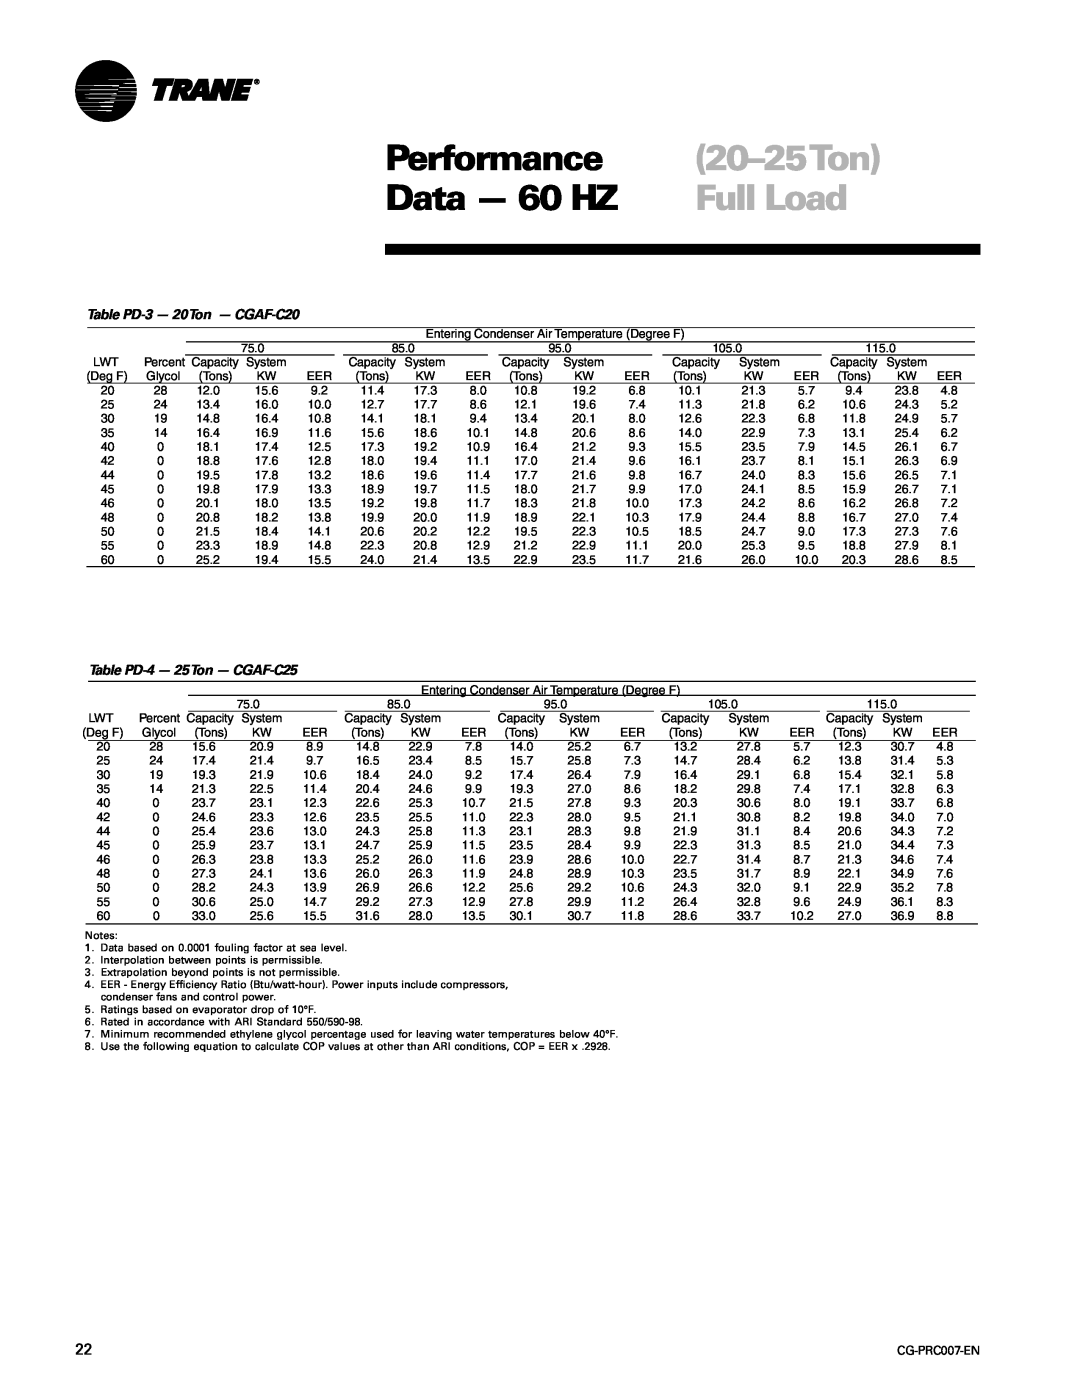 Trane CG-PRC007-EN manual 20-25Ton, Performance, Data - 60 HZ, Full Load, Table PD-3- 20Ton - CGAF-C20 